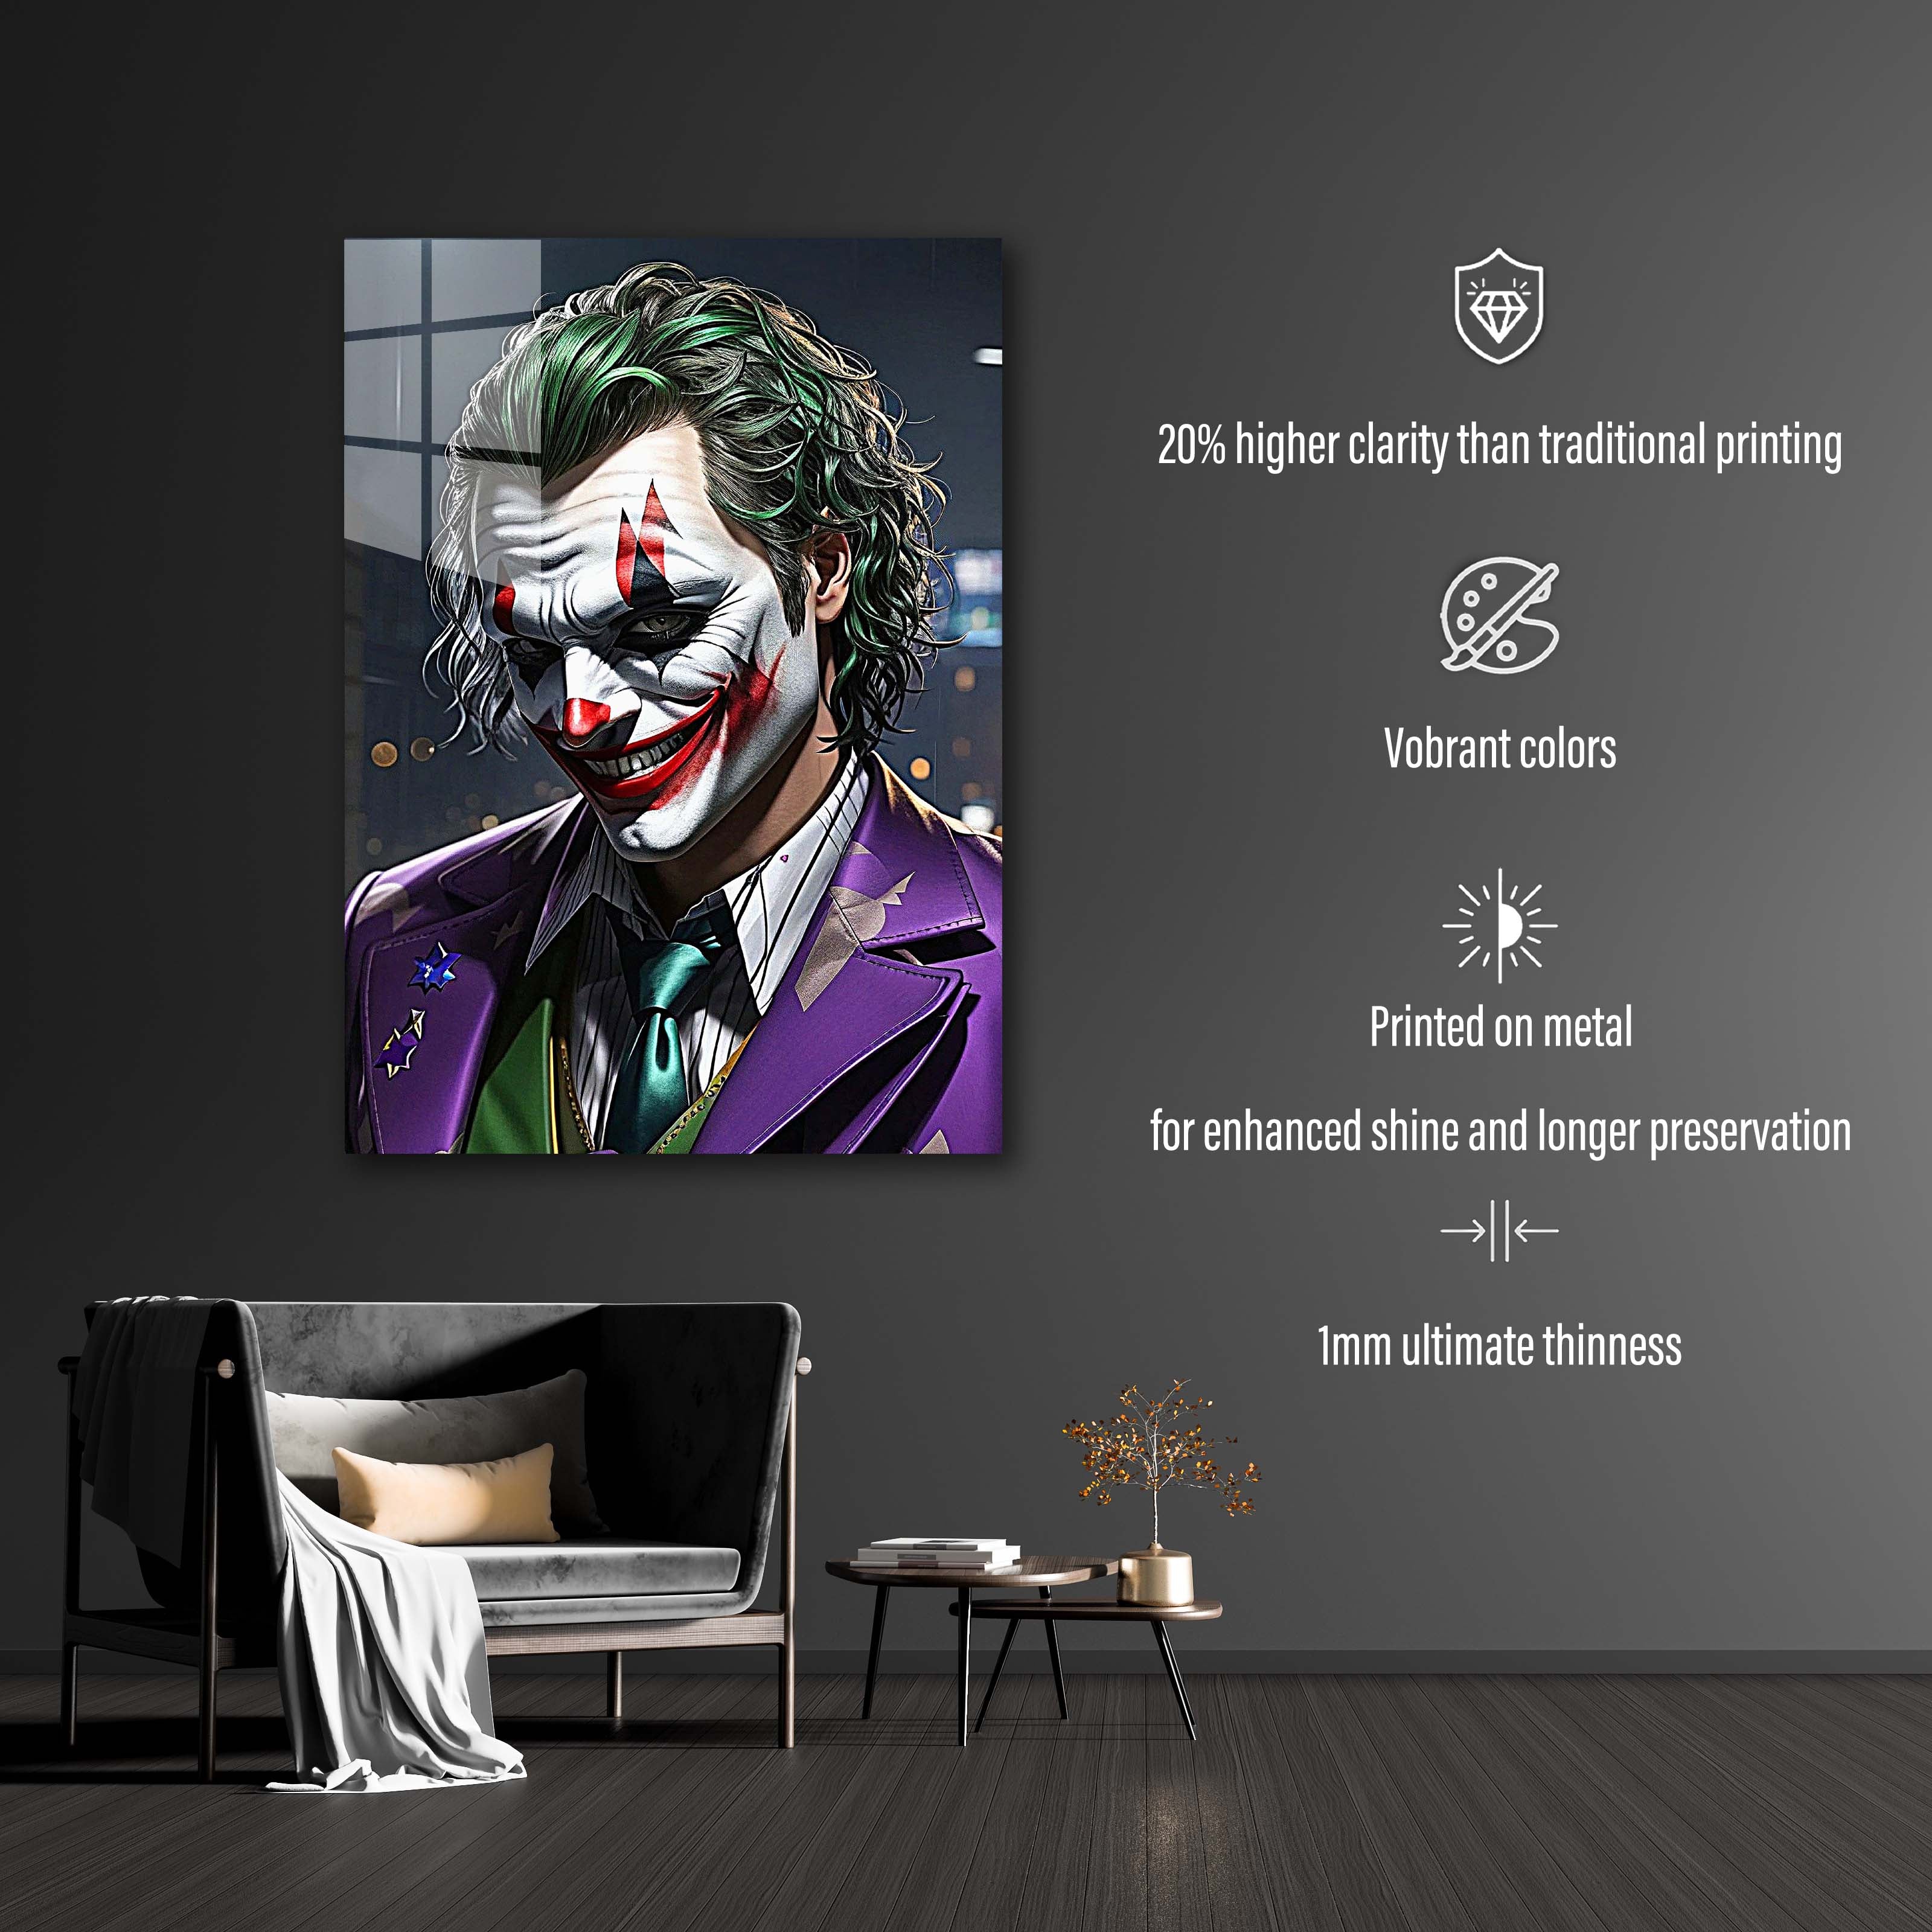 Joker arthur fleck-designed by @Hamka Risha